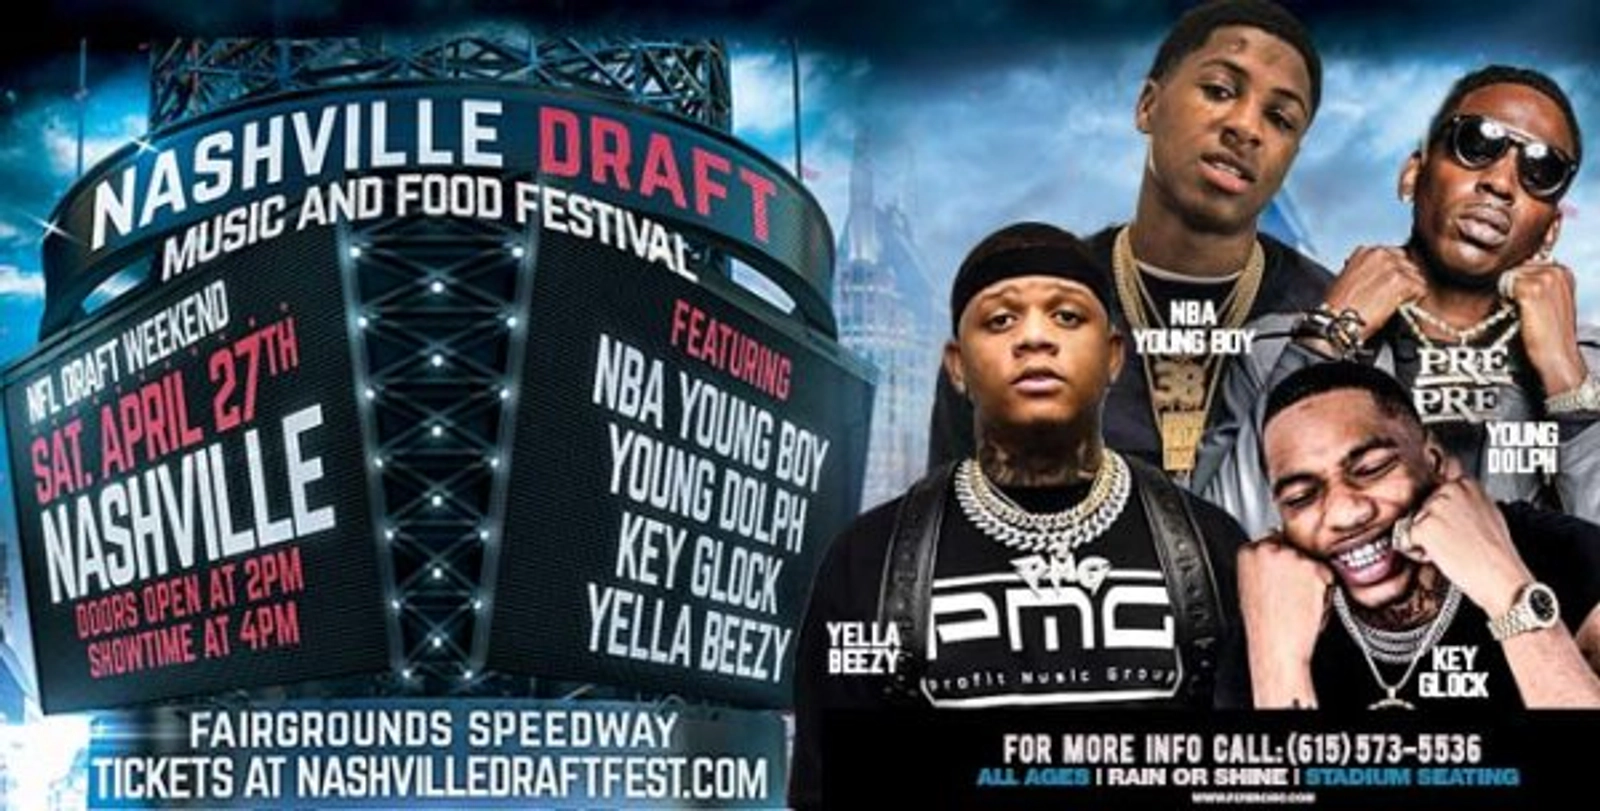             Nashville Draft Music & Food Festival - Thumbnail Image